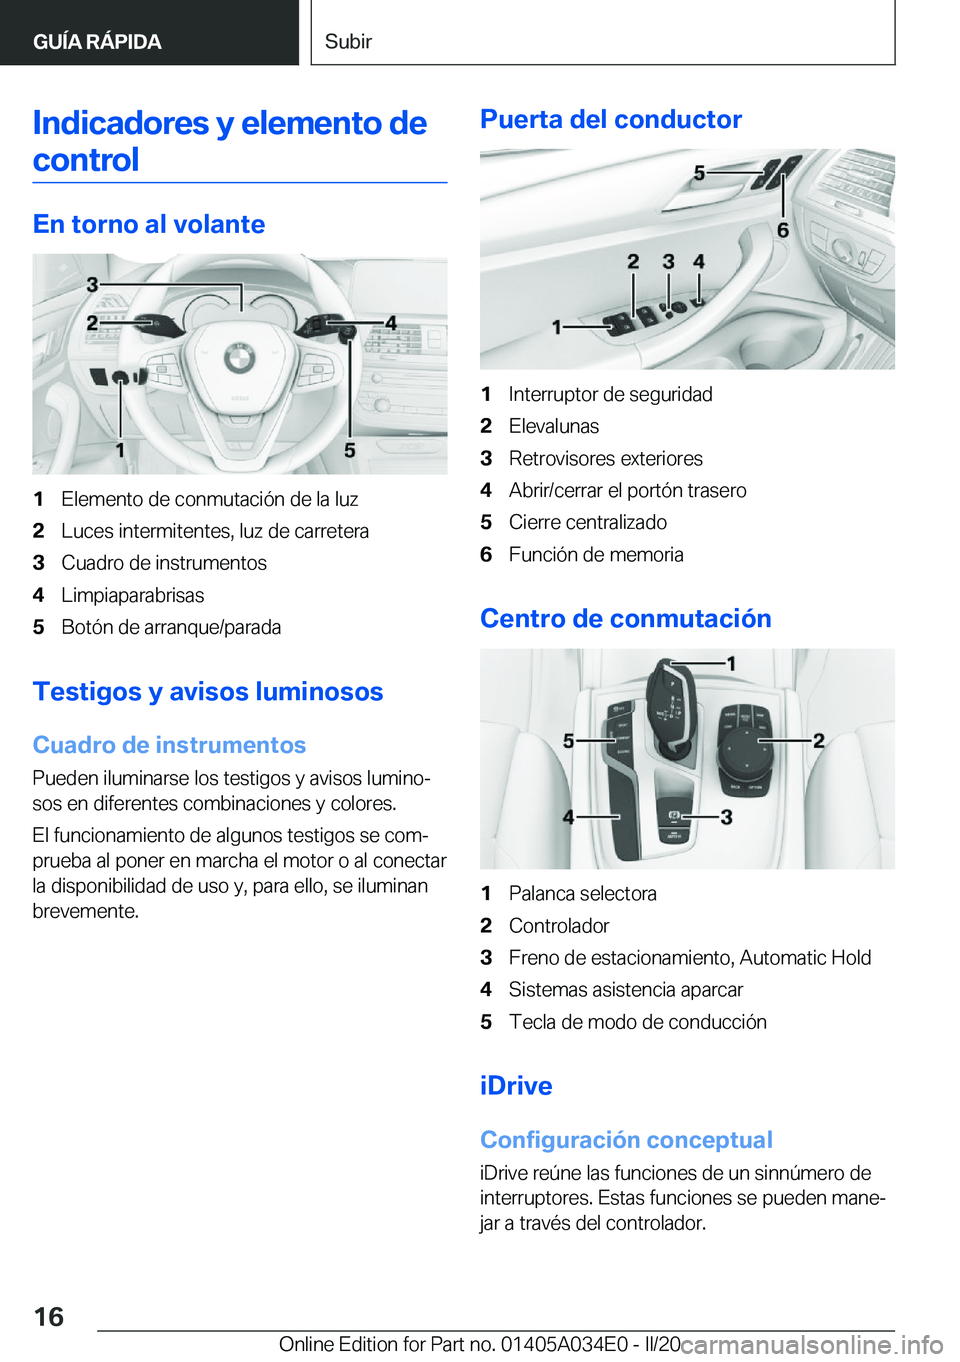 BMW X3 2020  Manuales de Empleo (in Spanish) �I�n�d�i�c�a�d�o�r�e�s��y��e�l�e�m�e�n�t�o��d�e
�c�o�n�t�r�o�l
�E�n��t�o�r�n�o��a�l��v�o�l�a�n�t�e
�1�E�l�e�m�e�n�t�o��d�e��c�o�n�m�u�t�a�c�i�